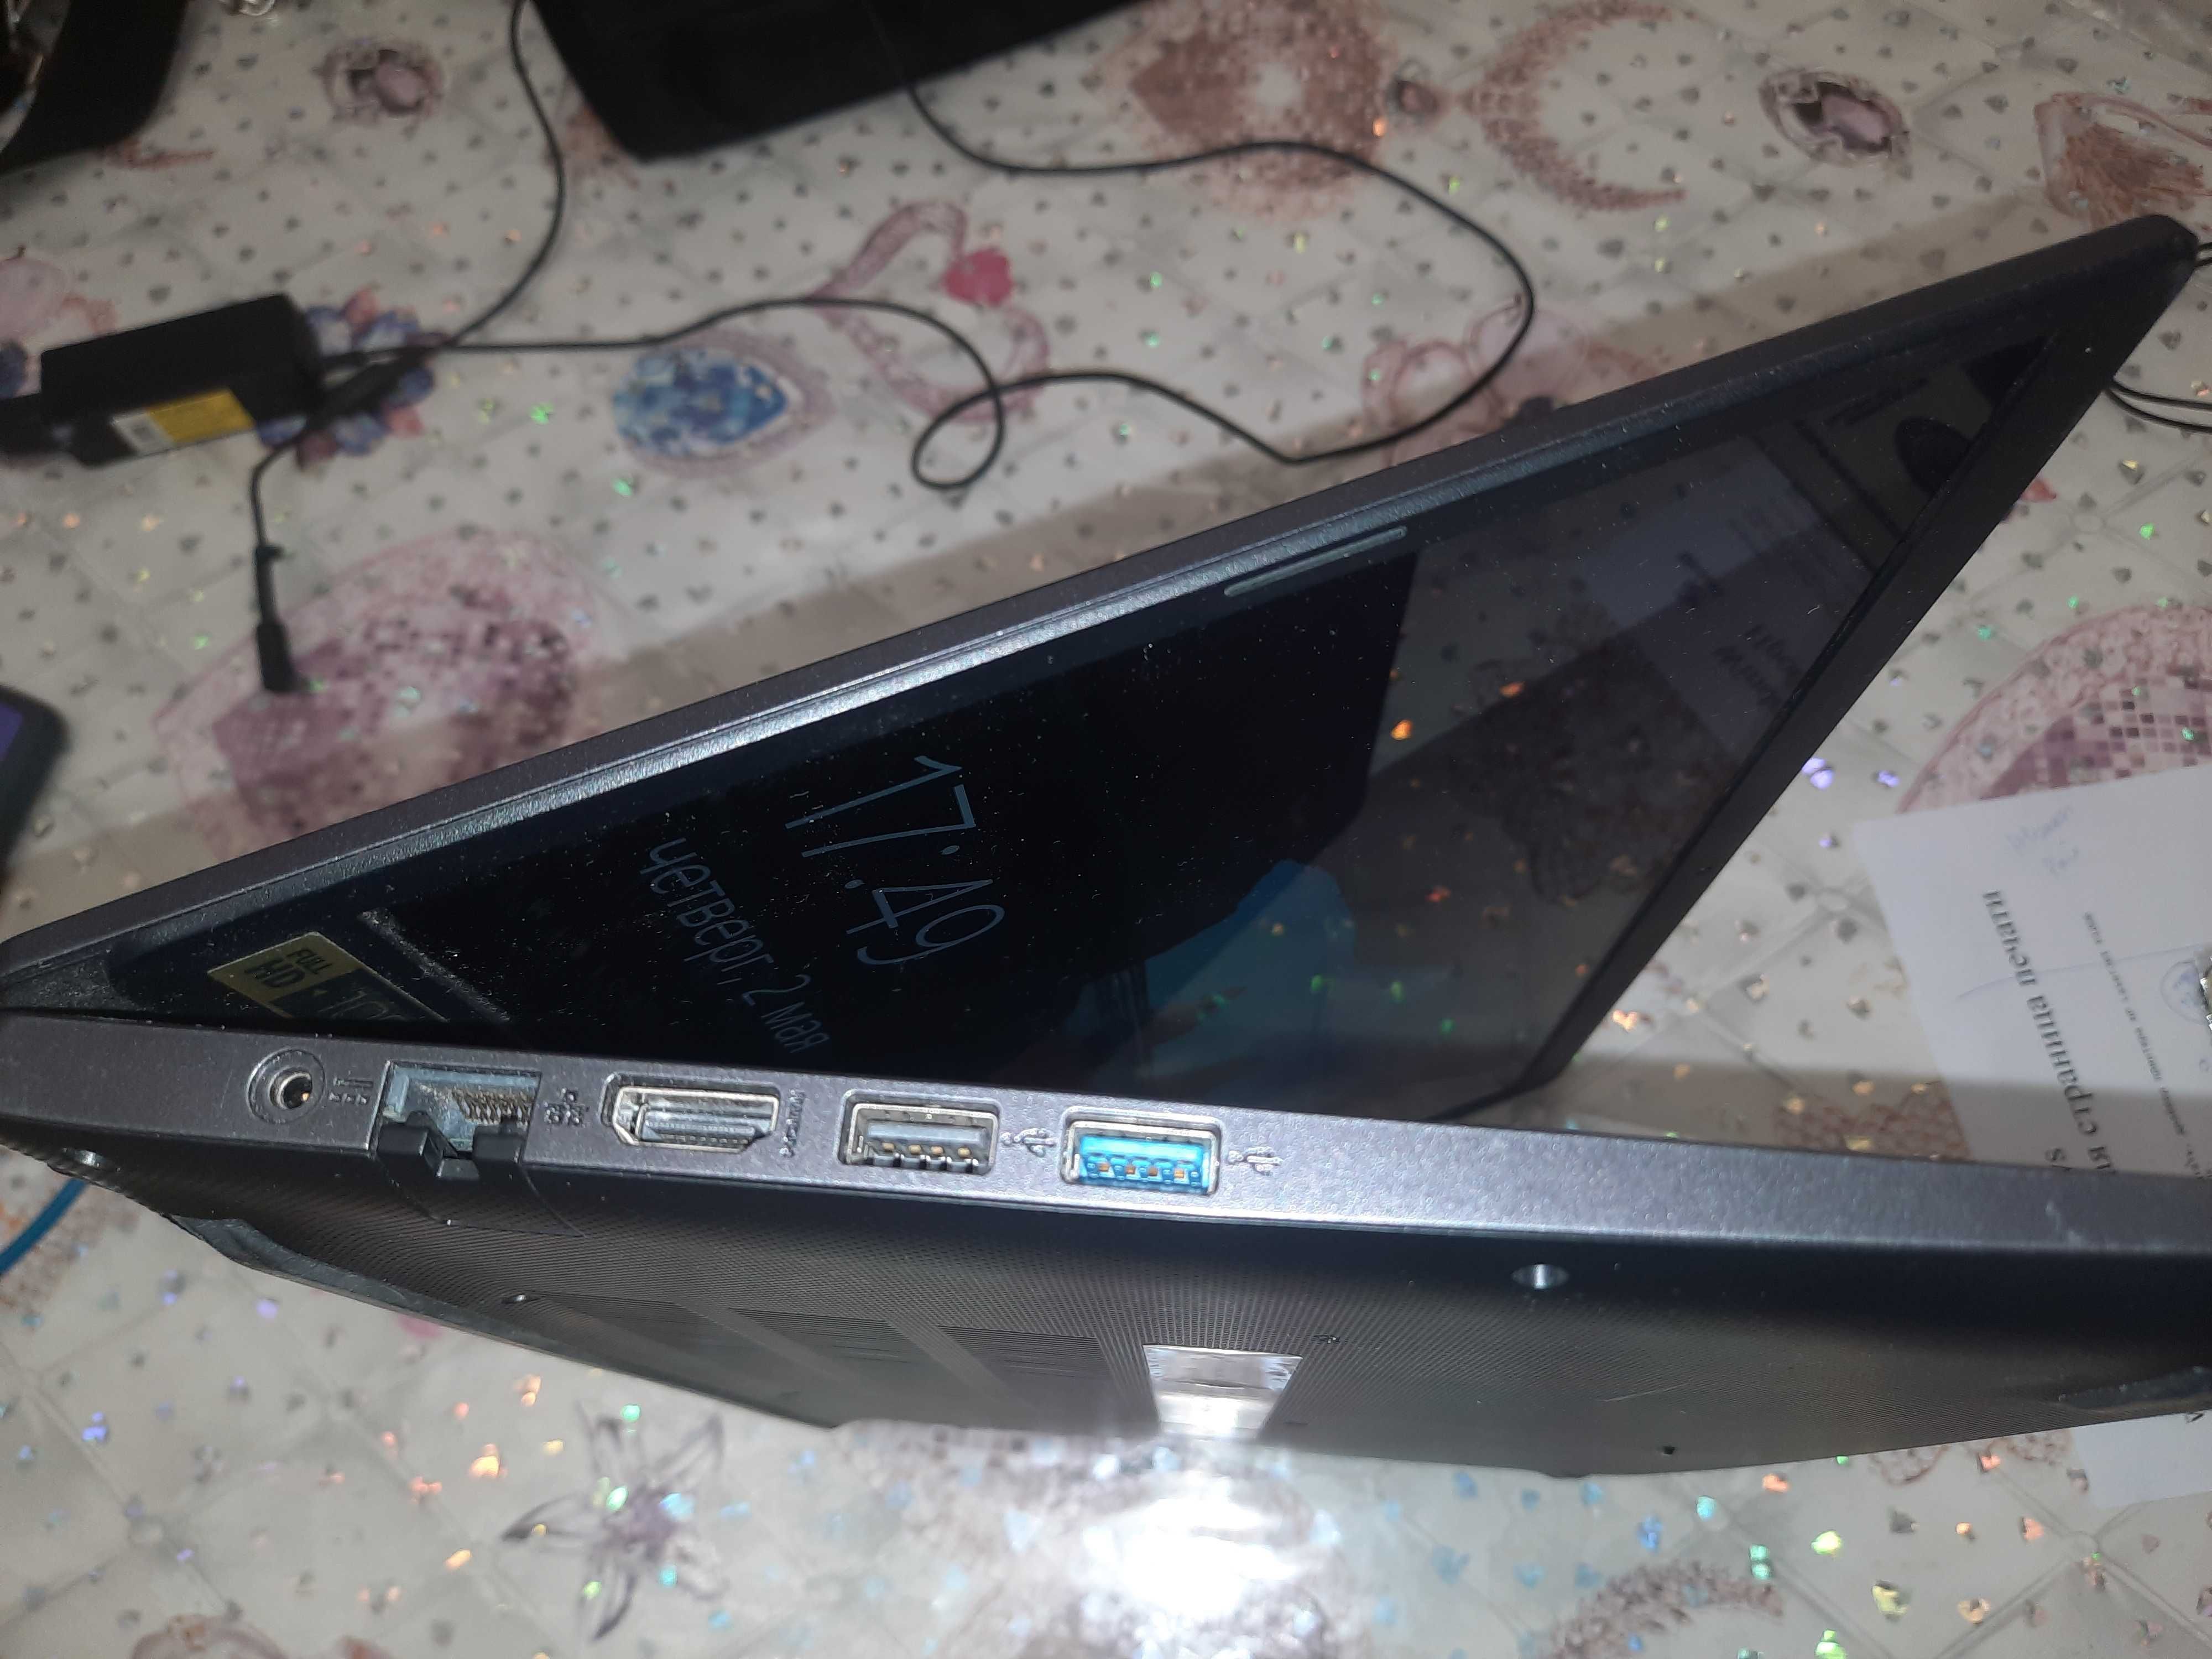 Ноутбук(ультрабук) Acer N5030 Cpu -1.10Ghz (4-ядерный) в идеале 21г